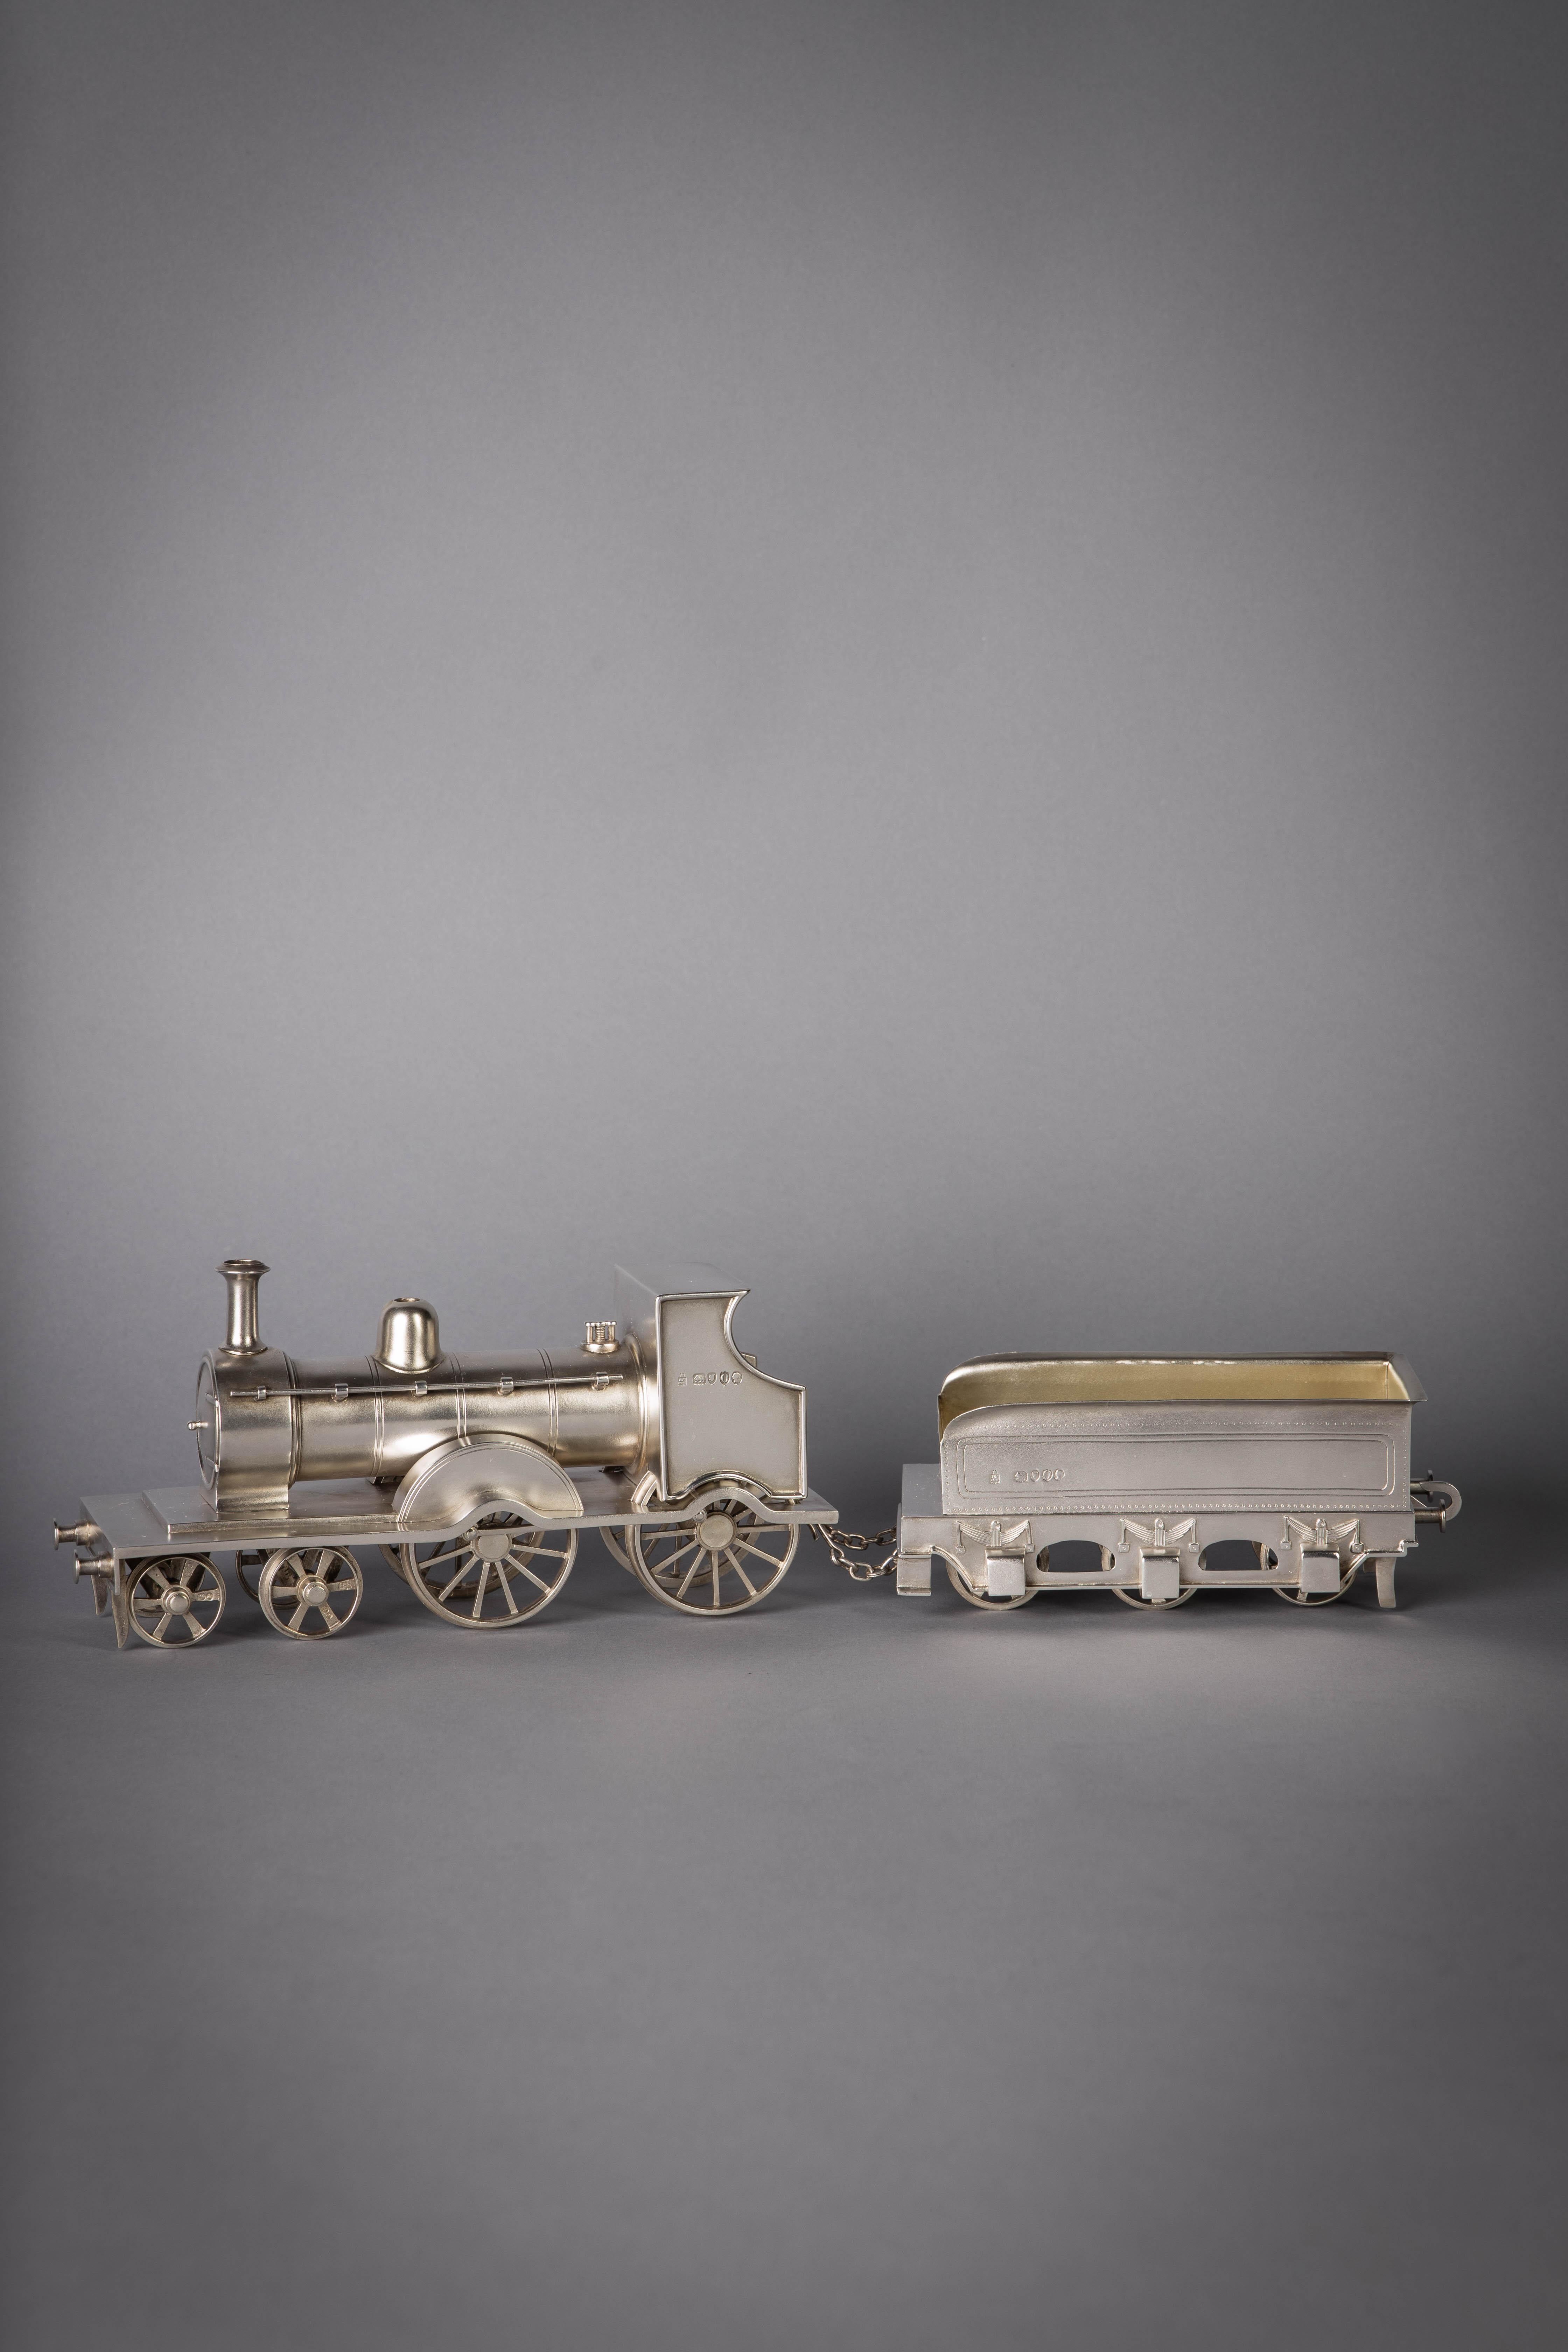 Steam locomotive pulling an open car. Marked: London, 1889, Maker: Alfred Benson and Henry Hugh Webb.